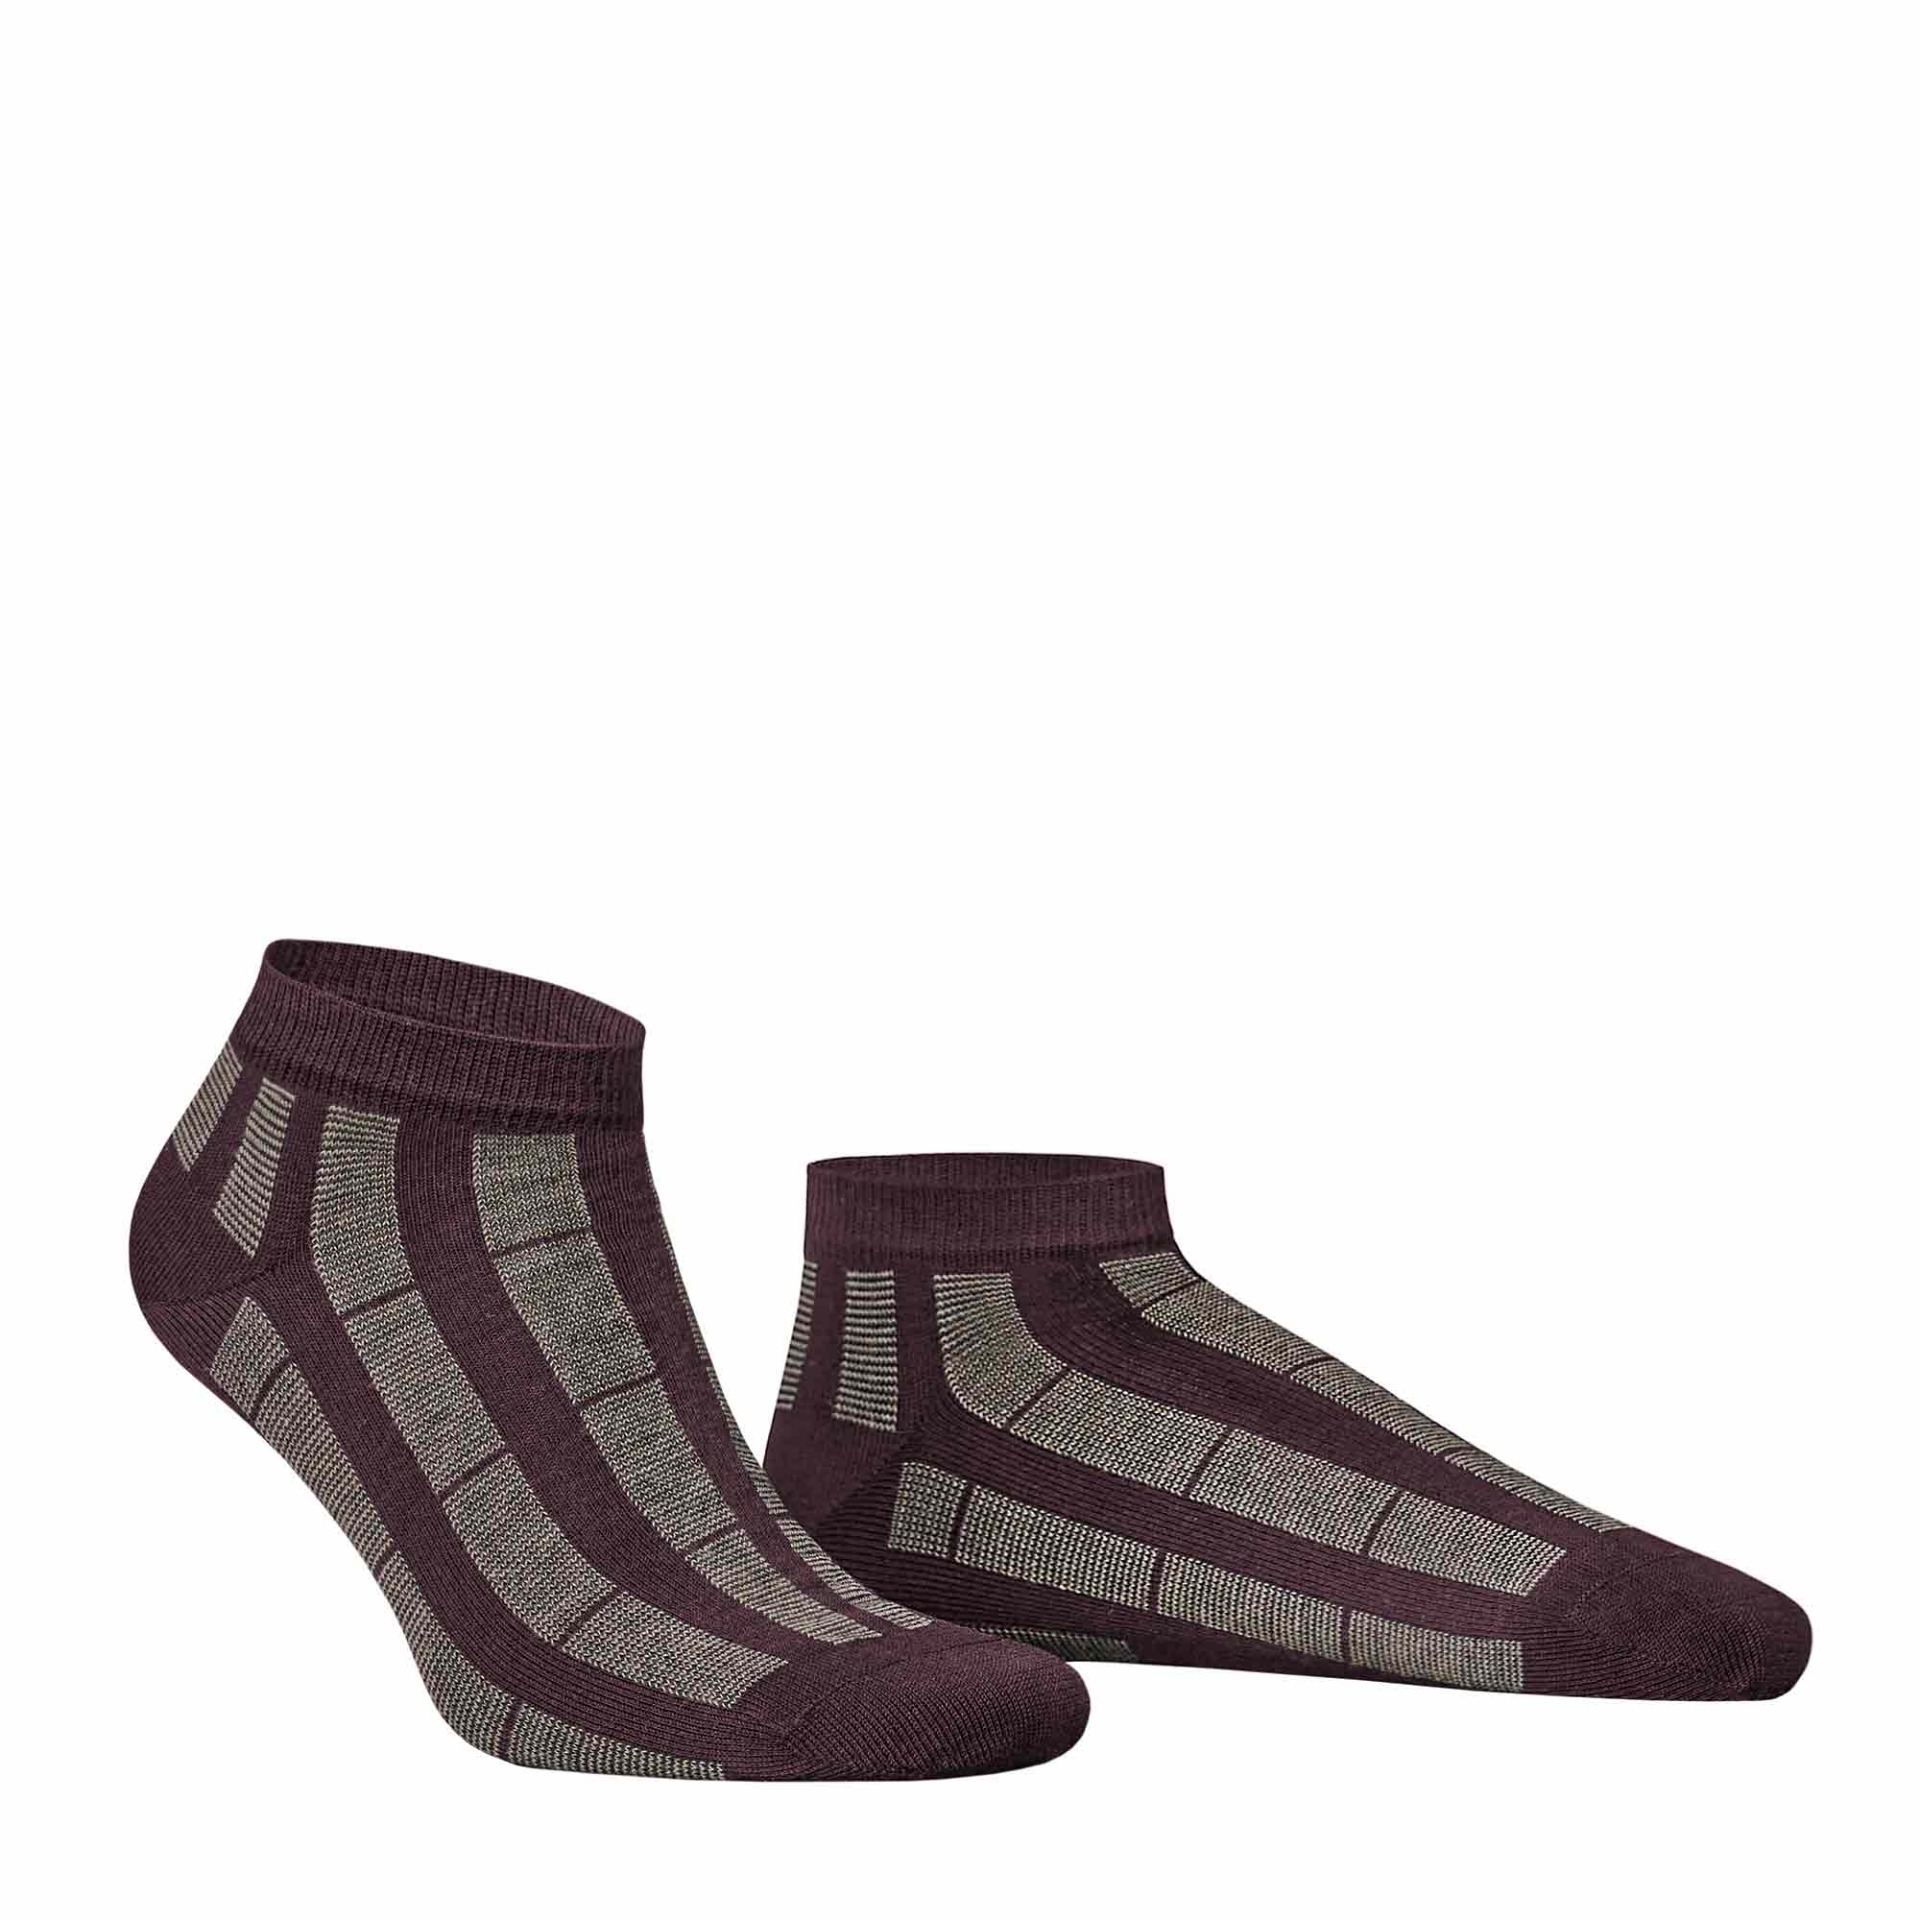 HUDSON Herren PIN -  39/42 - Sneaker Socken mit Streifen-Muster - Blackberry 0113 (Rot)